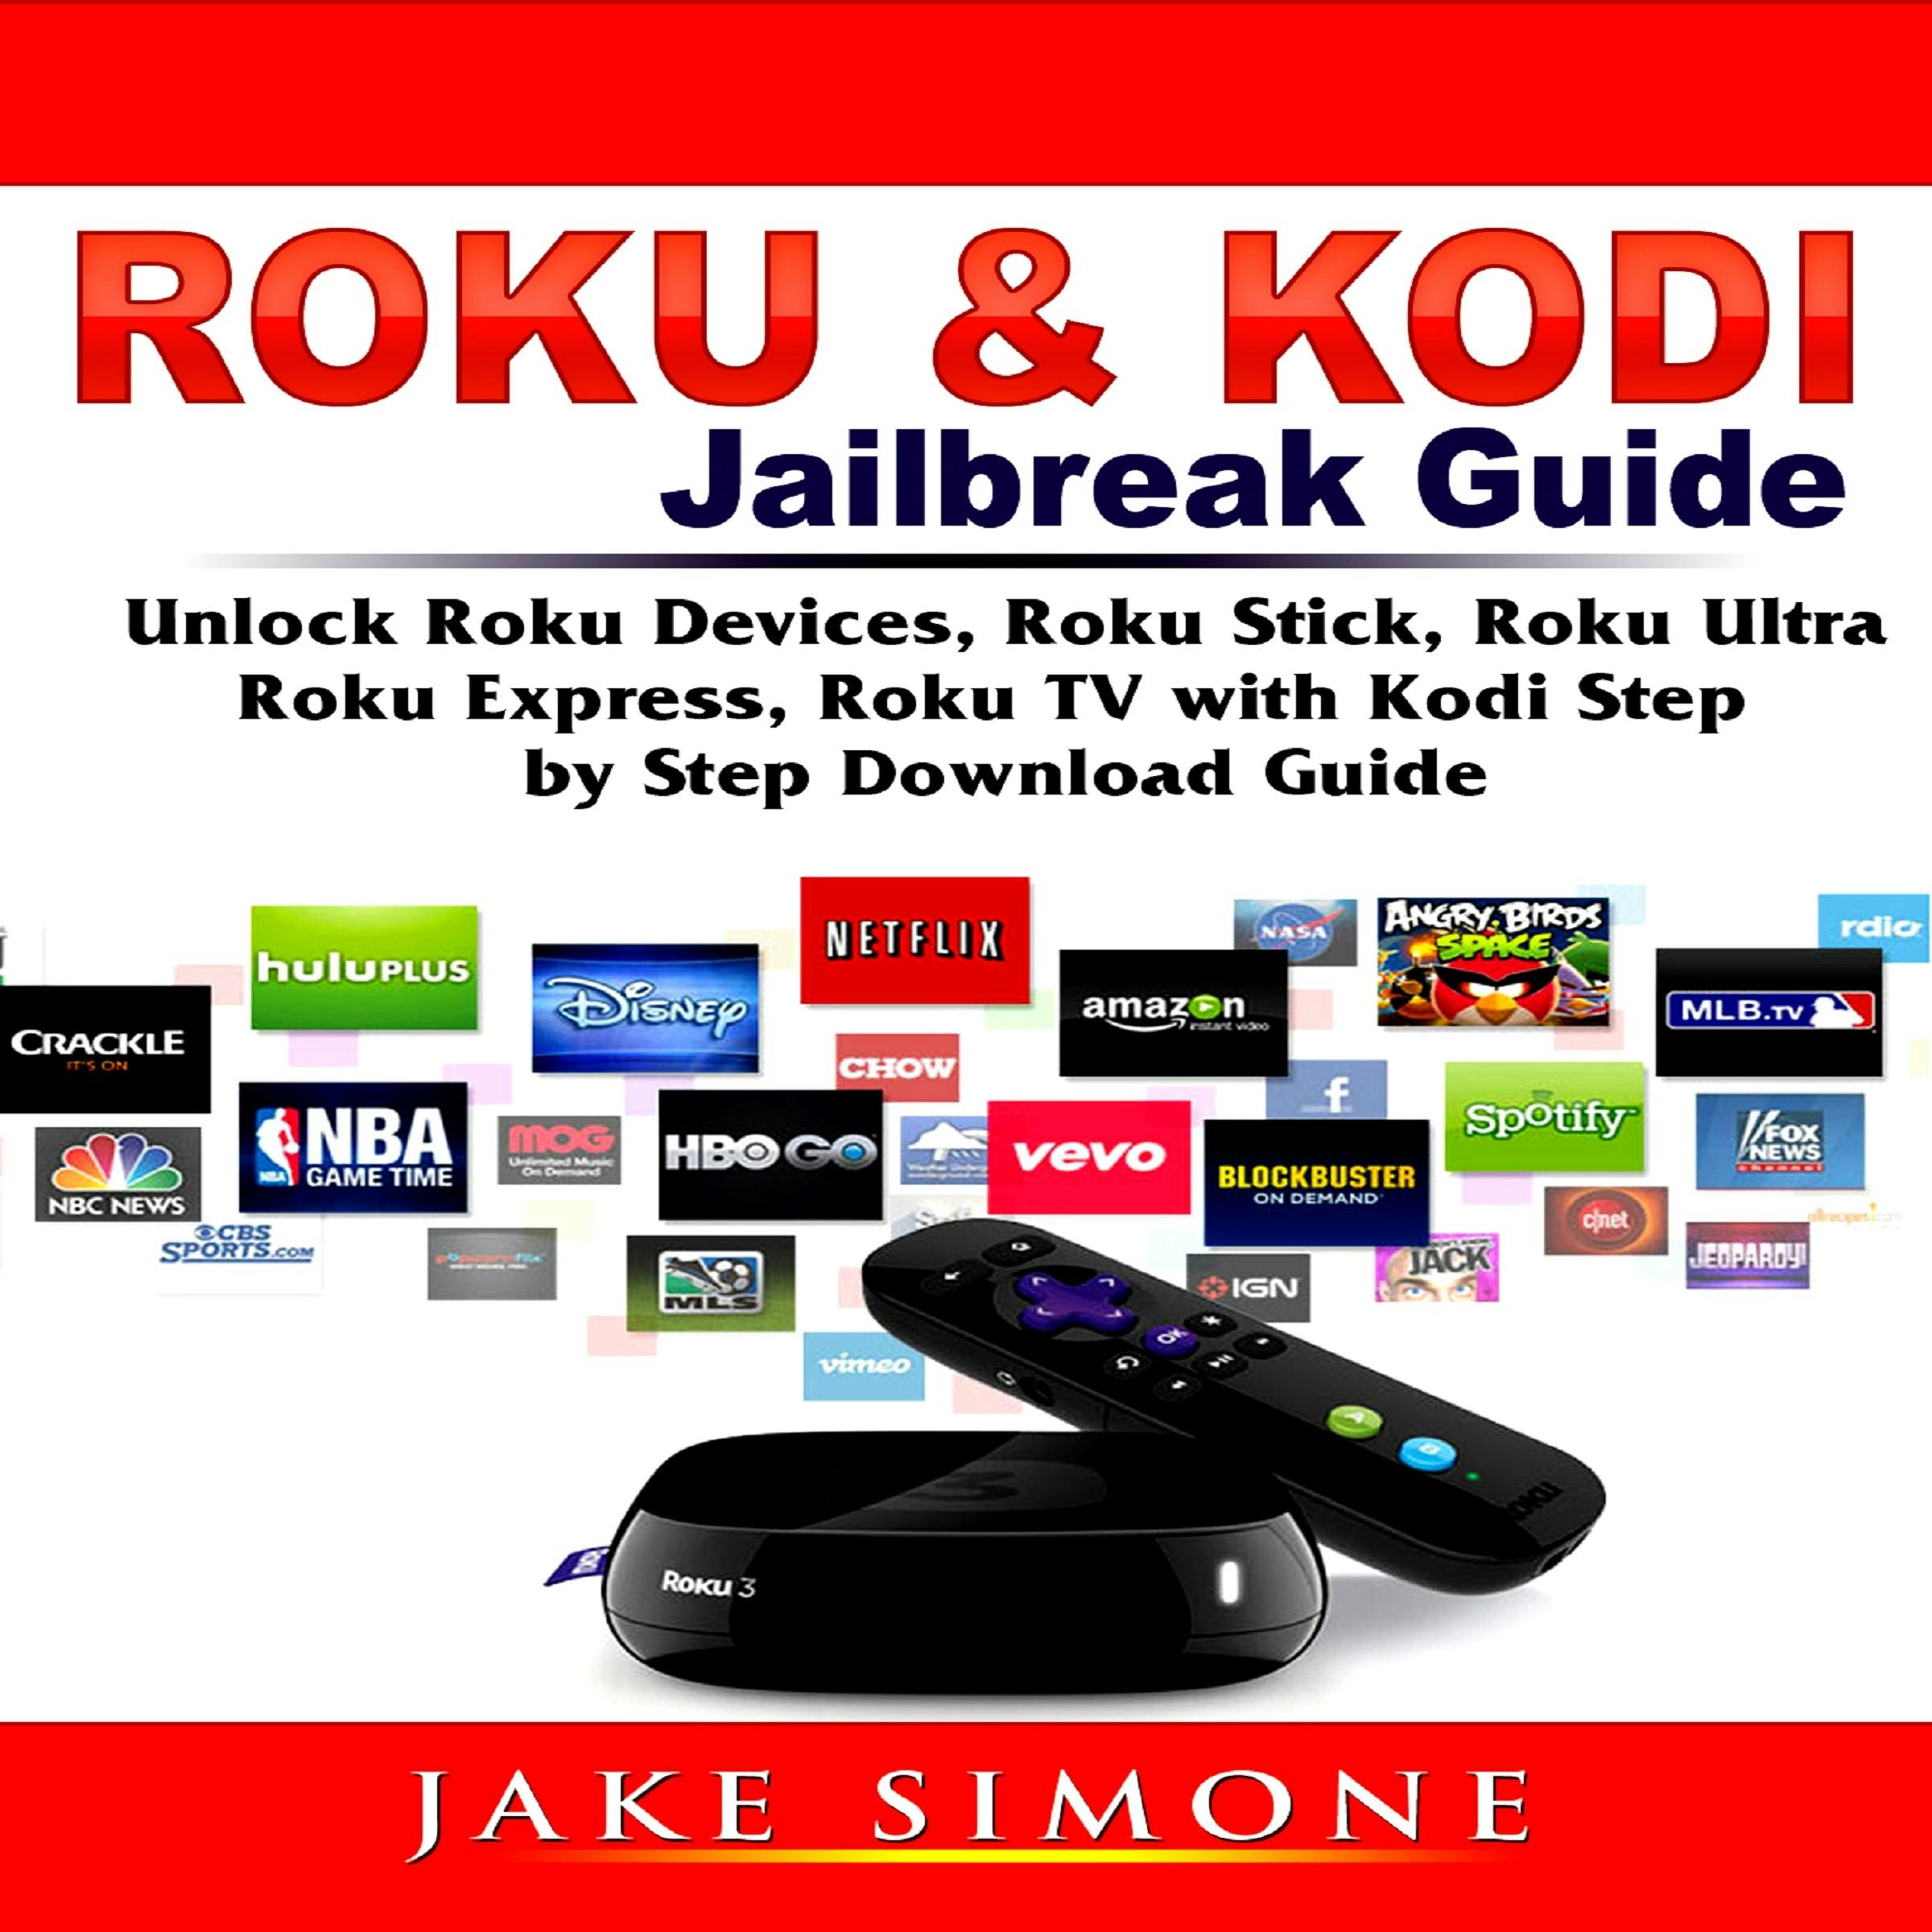 Roku & Kodi Jailbreak Guide Unlock Roku Devices, Roku Stick, Roku Ultra, Roku Express, Roku TV with Kodi Step by Step Download Guide - Jake Simone